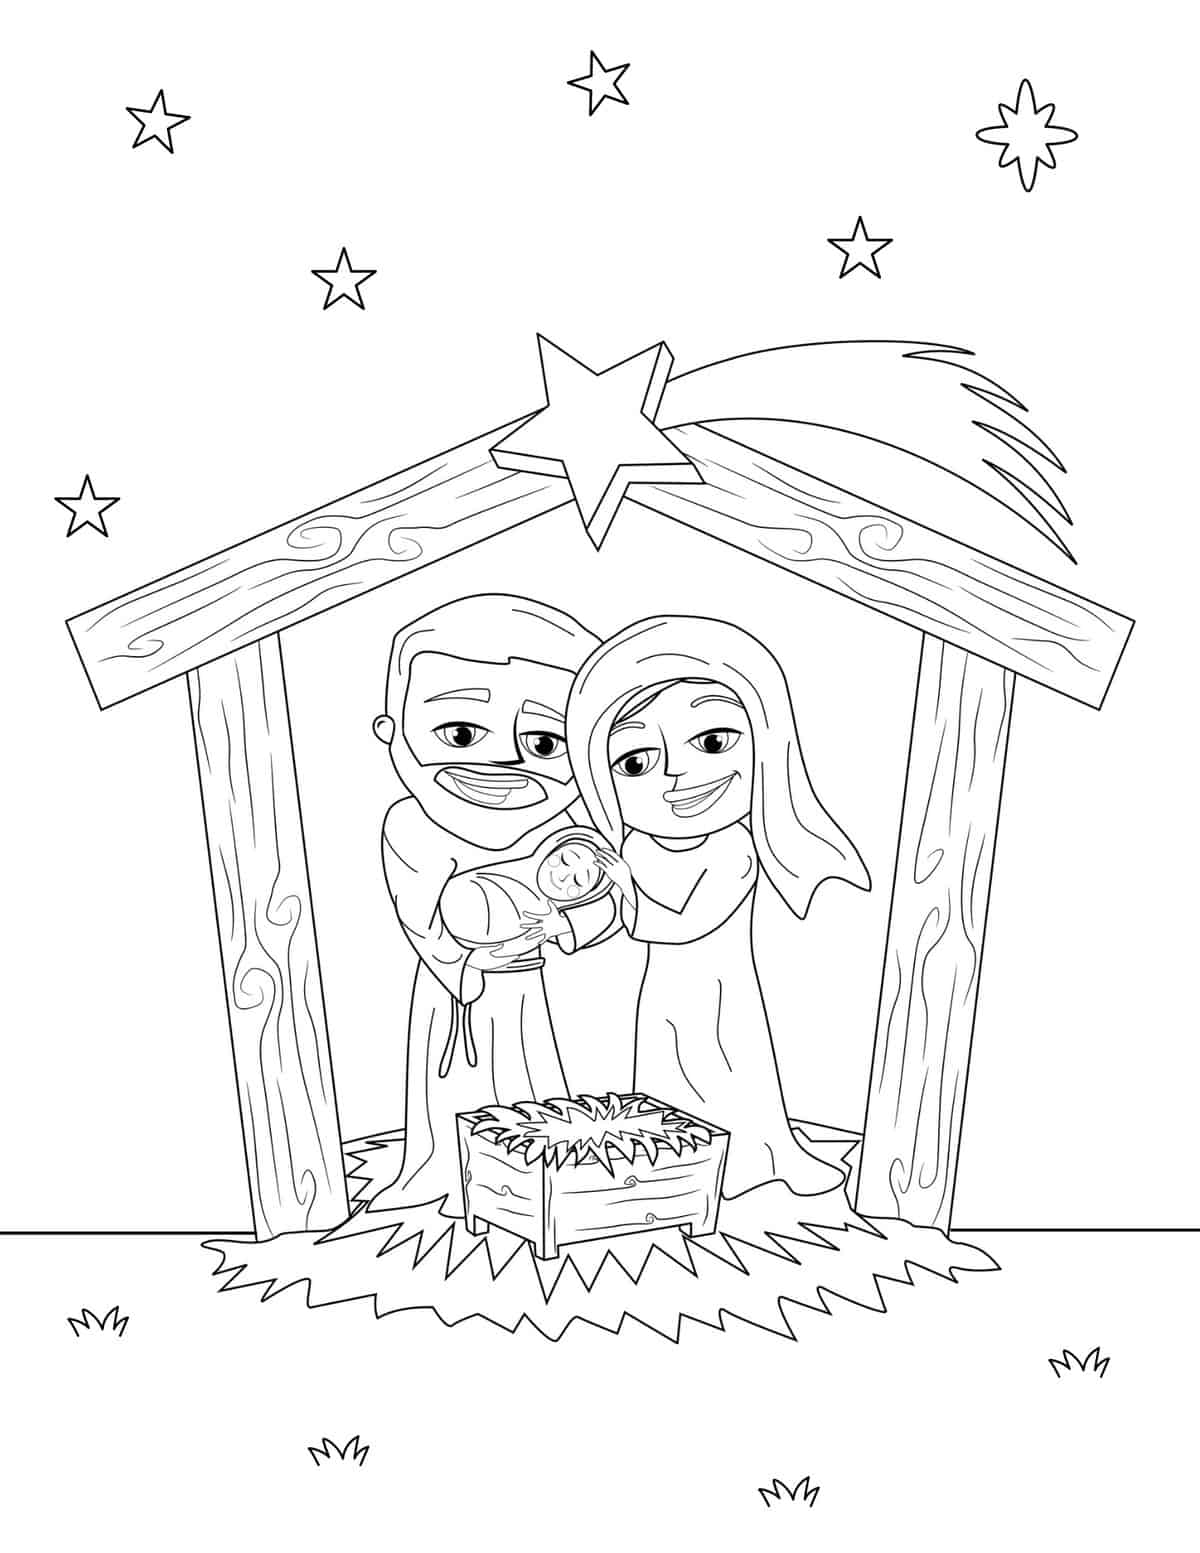 nativity scene coloring page